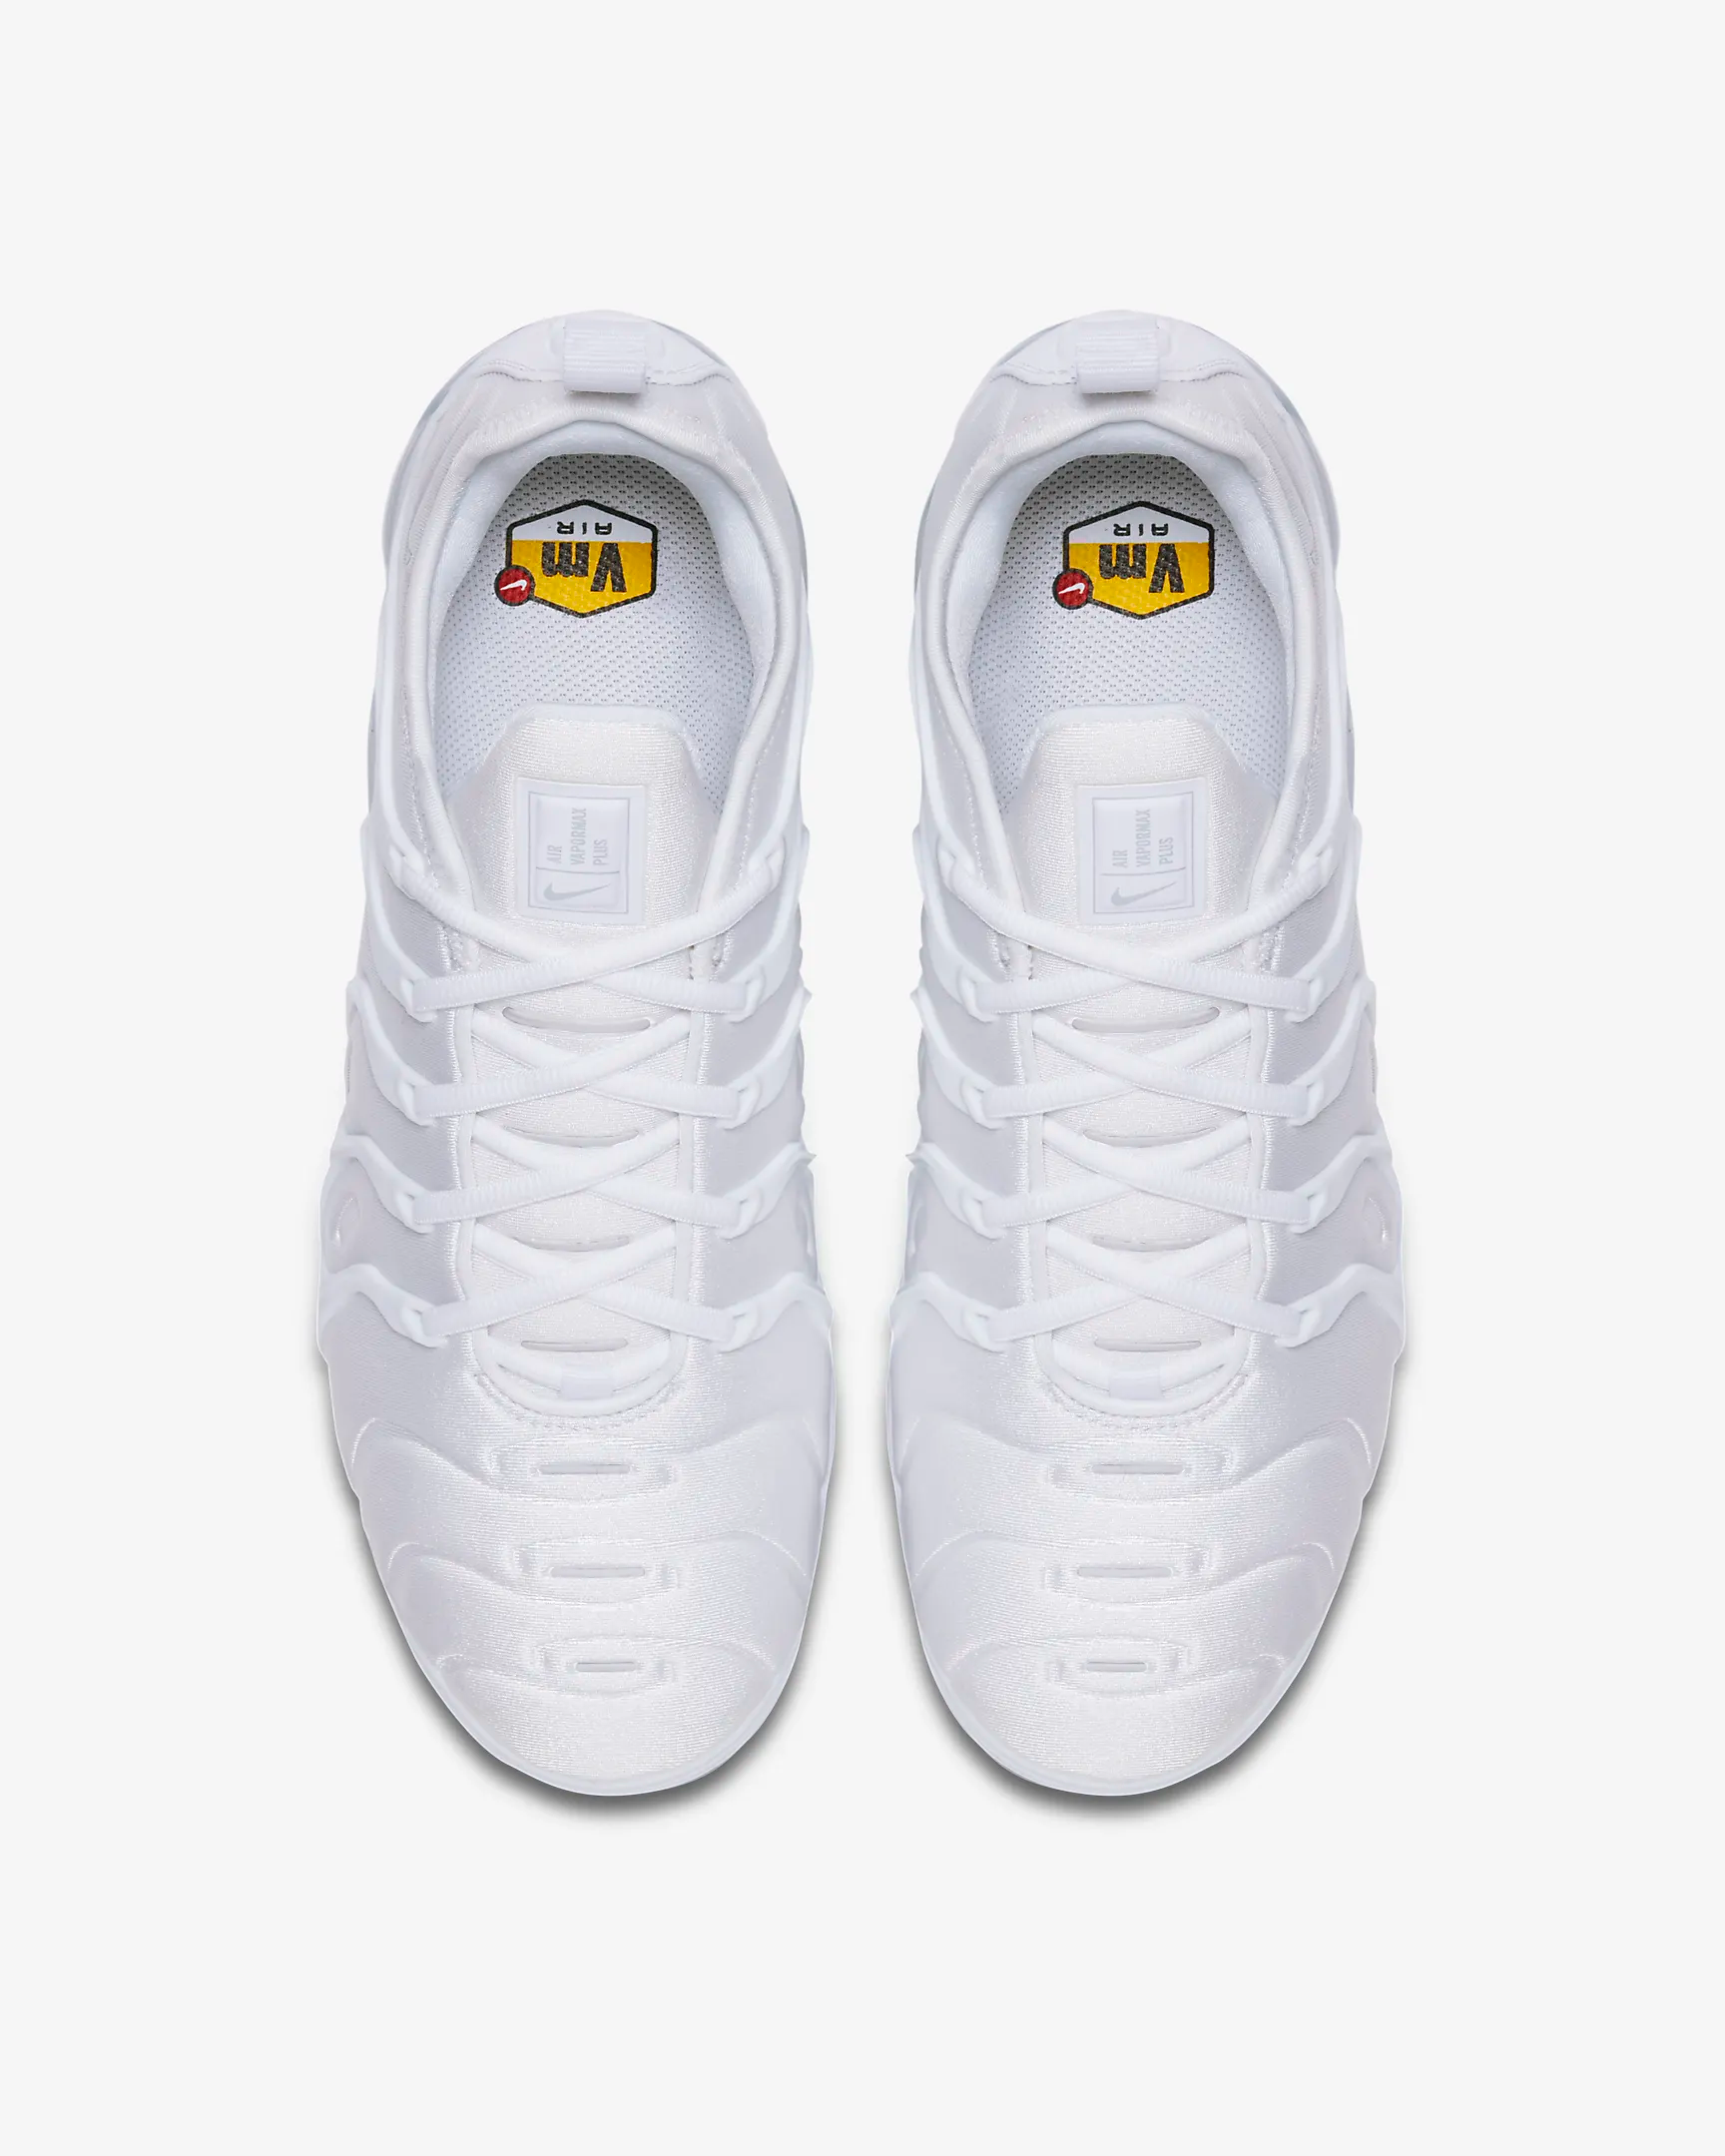 Nike Men's Air VaporMax Plus Shoes - White / Pure Platinum Sportive